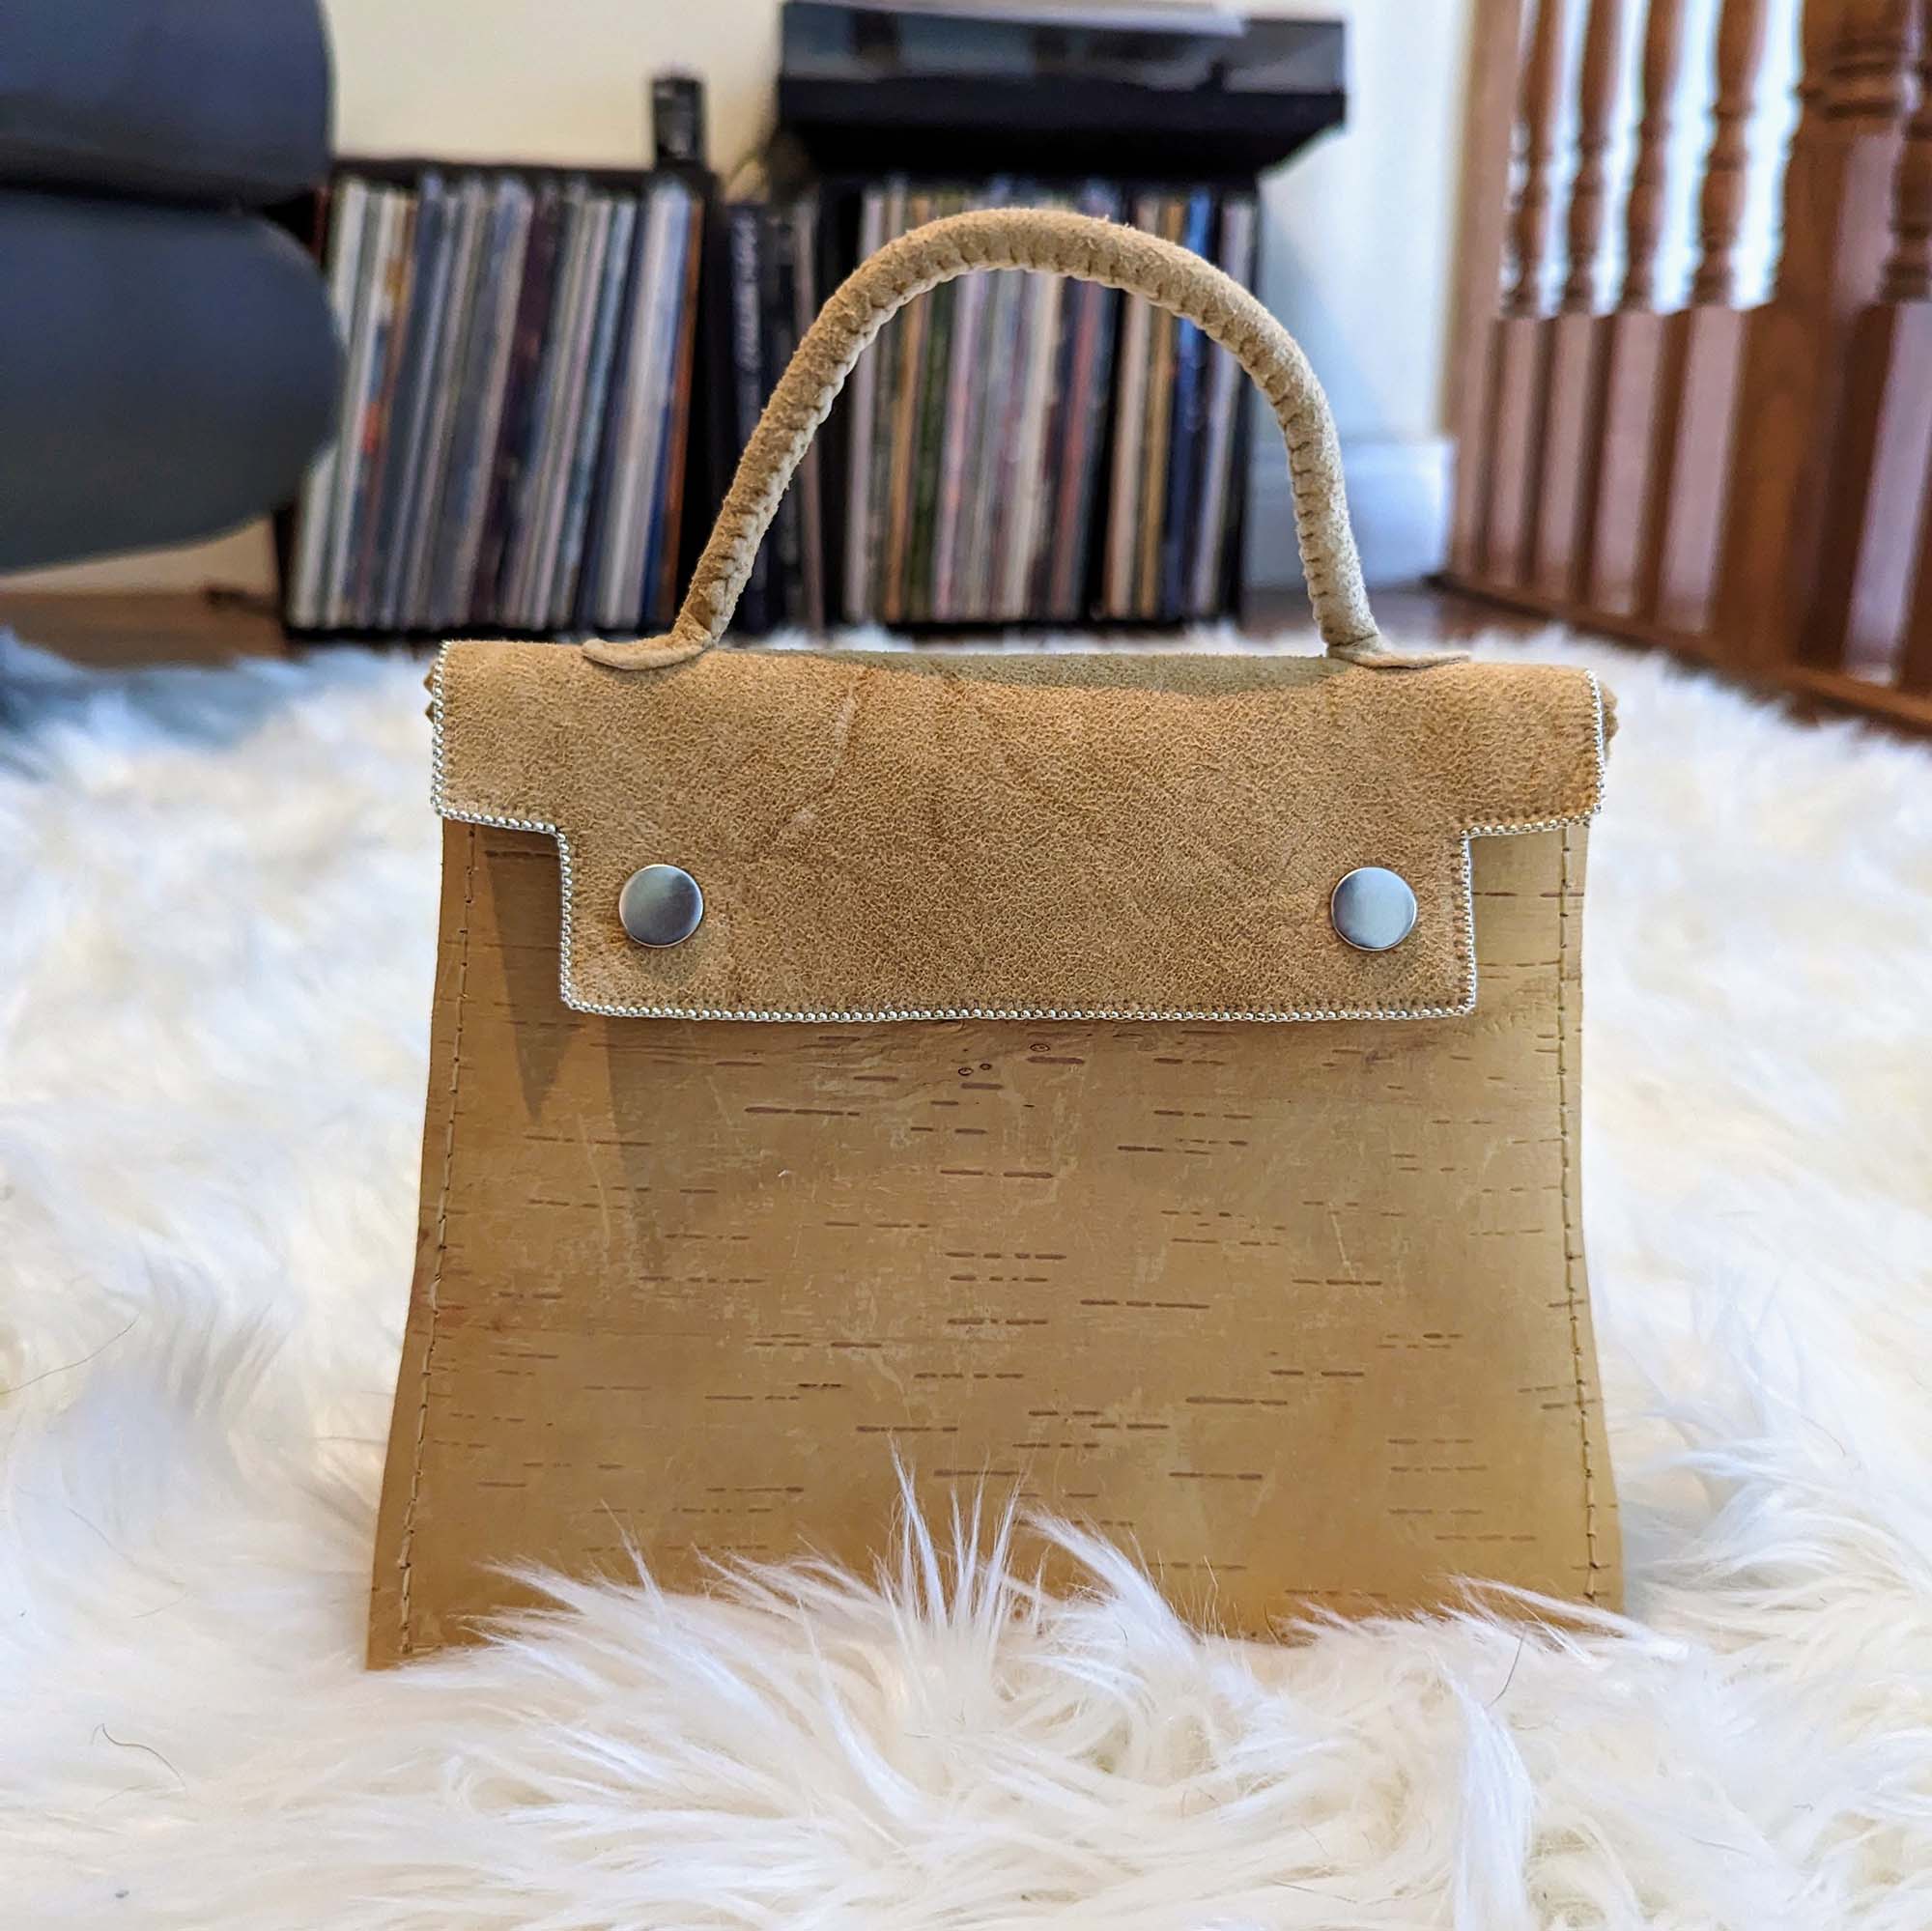 A handbag made of leather and birchbark sitting on a fluffy white rug